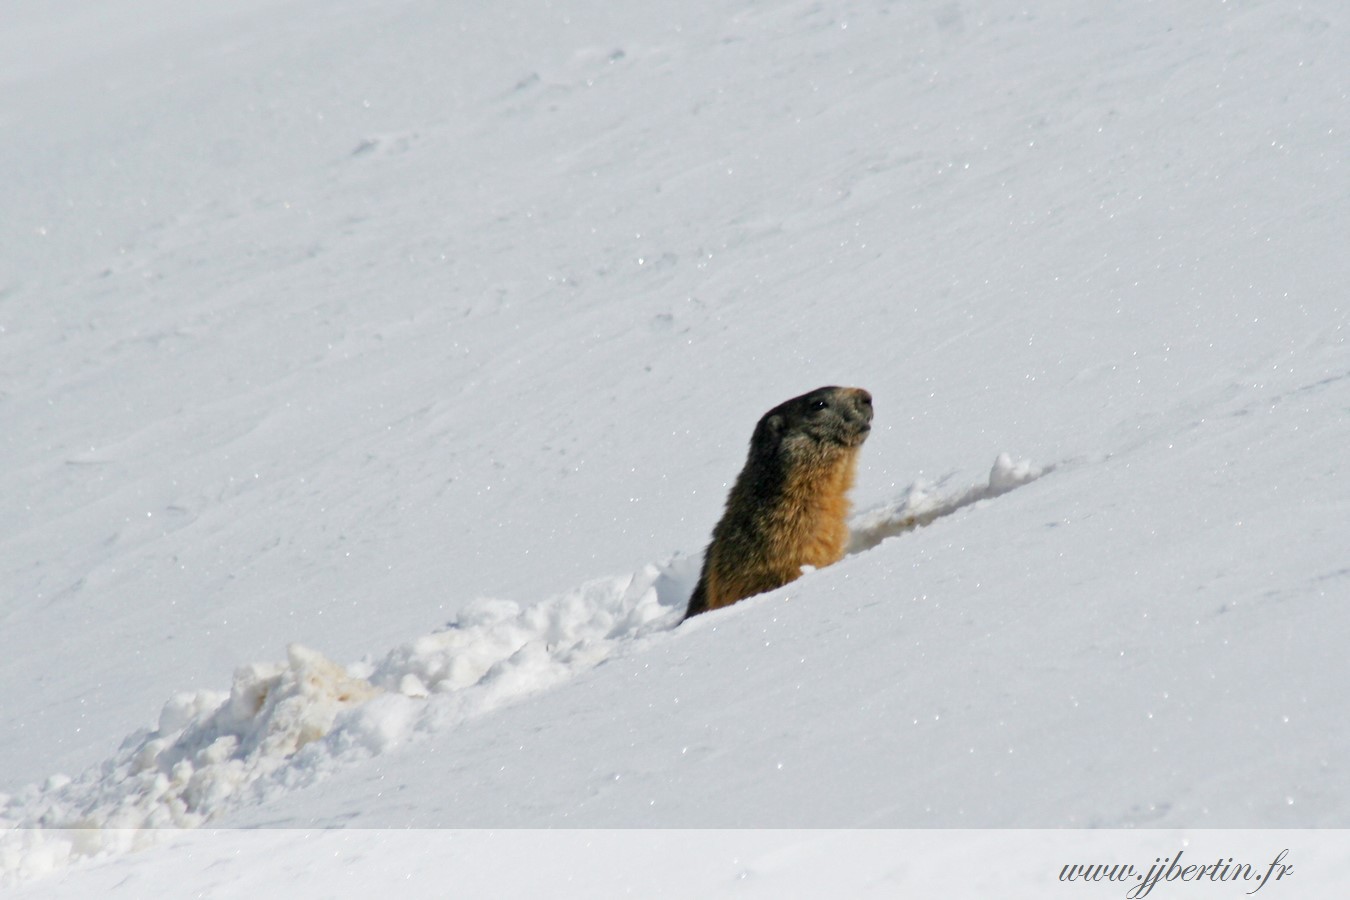 photos animalières drôme jj bertin.fr 2019 marmotte des Alpes